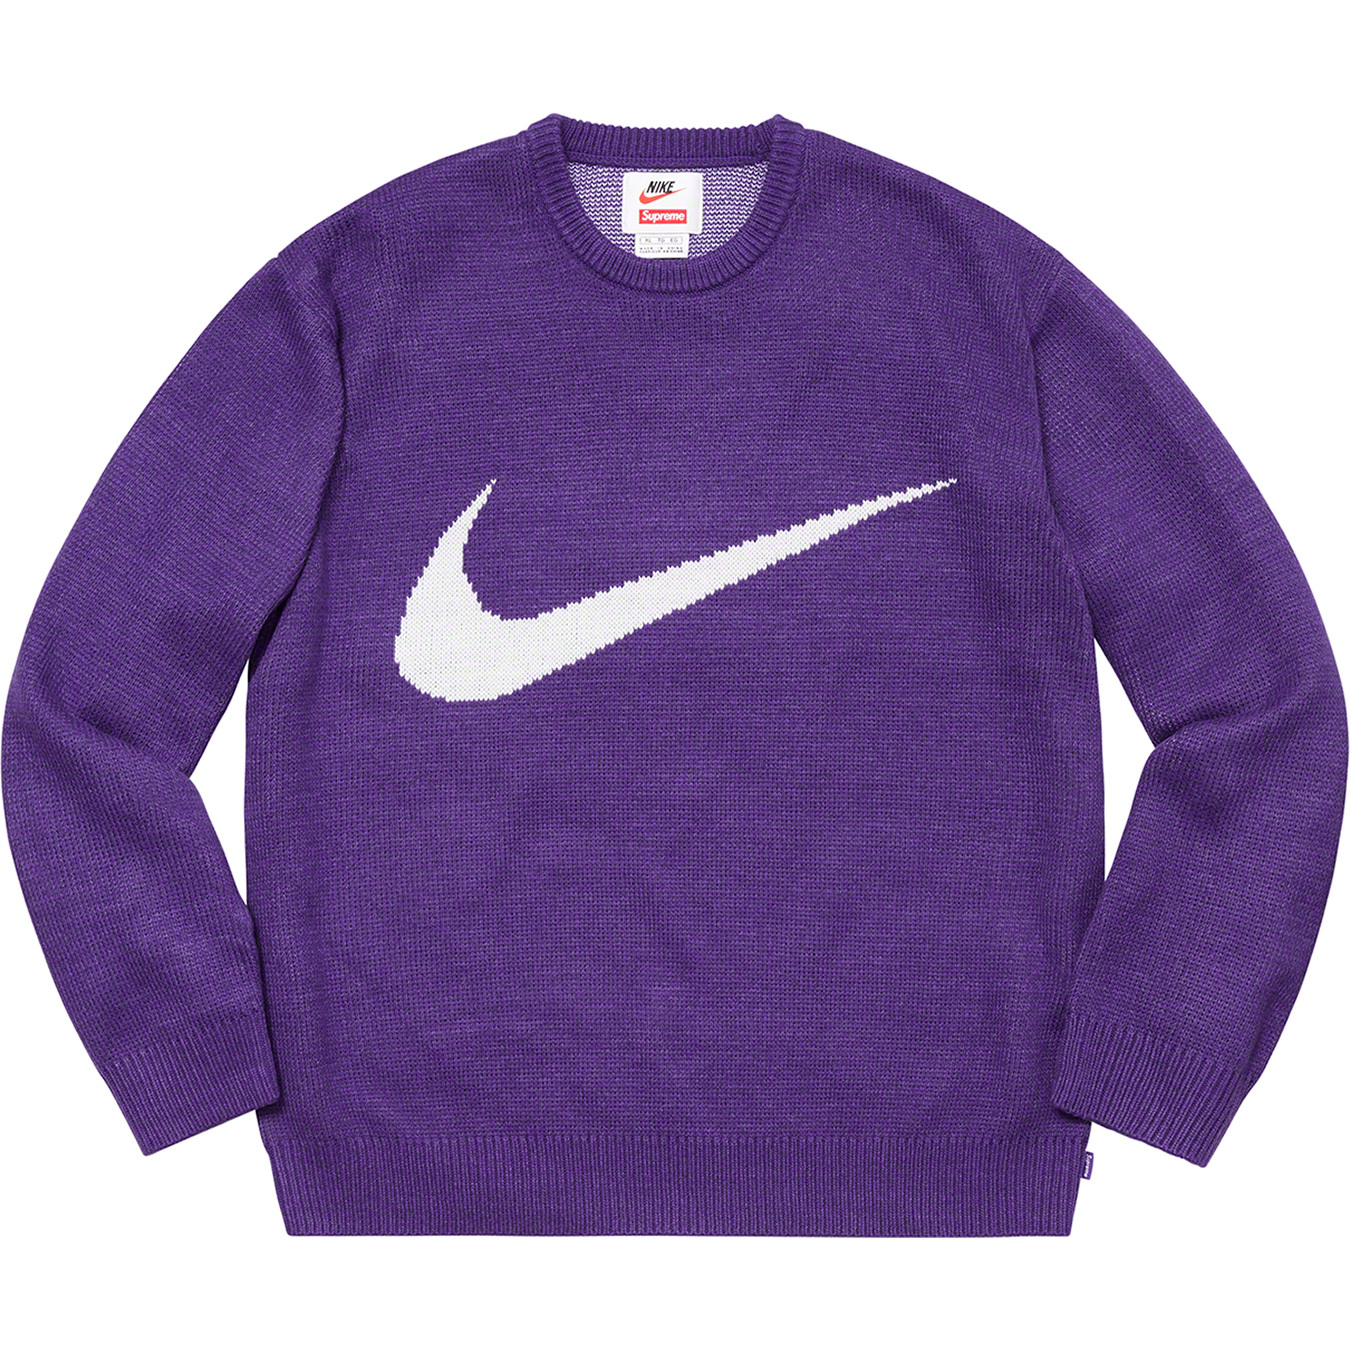 Nike Swoosh Sweater - spring summer 2019 - Supreme